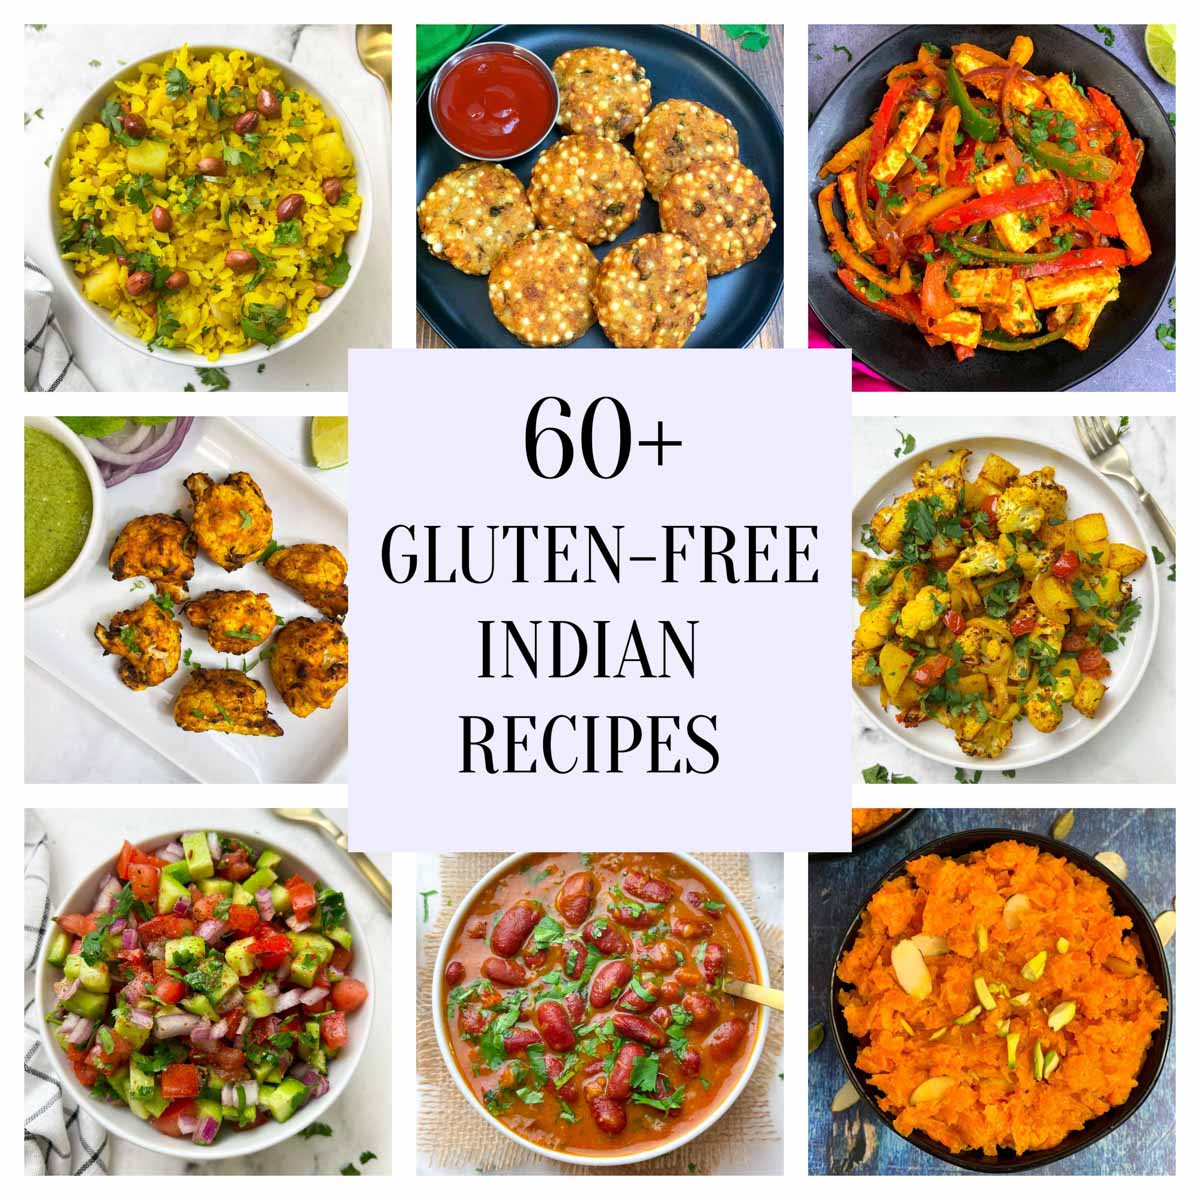 healthy gluten free recipes